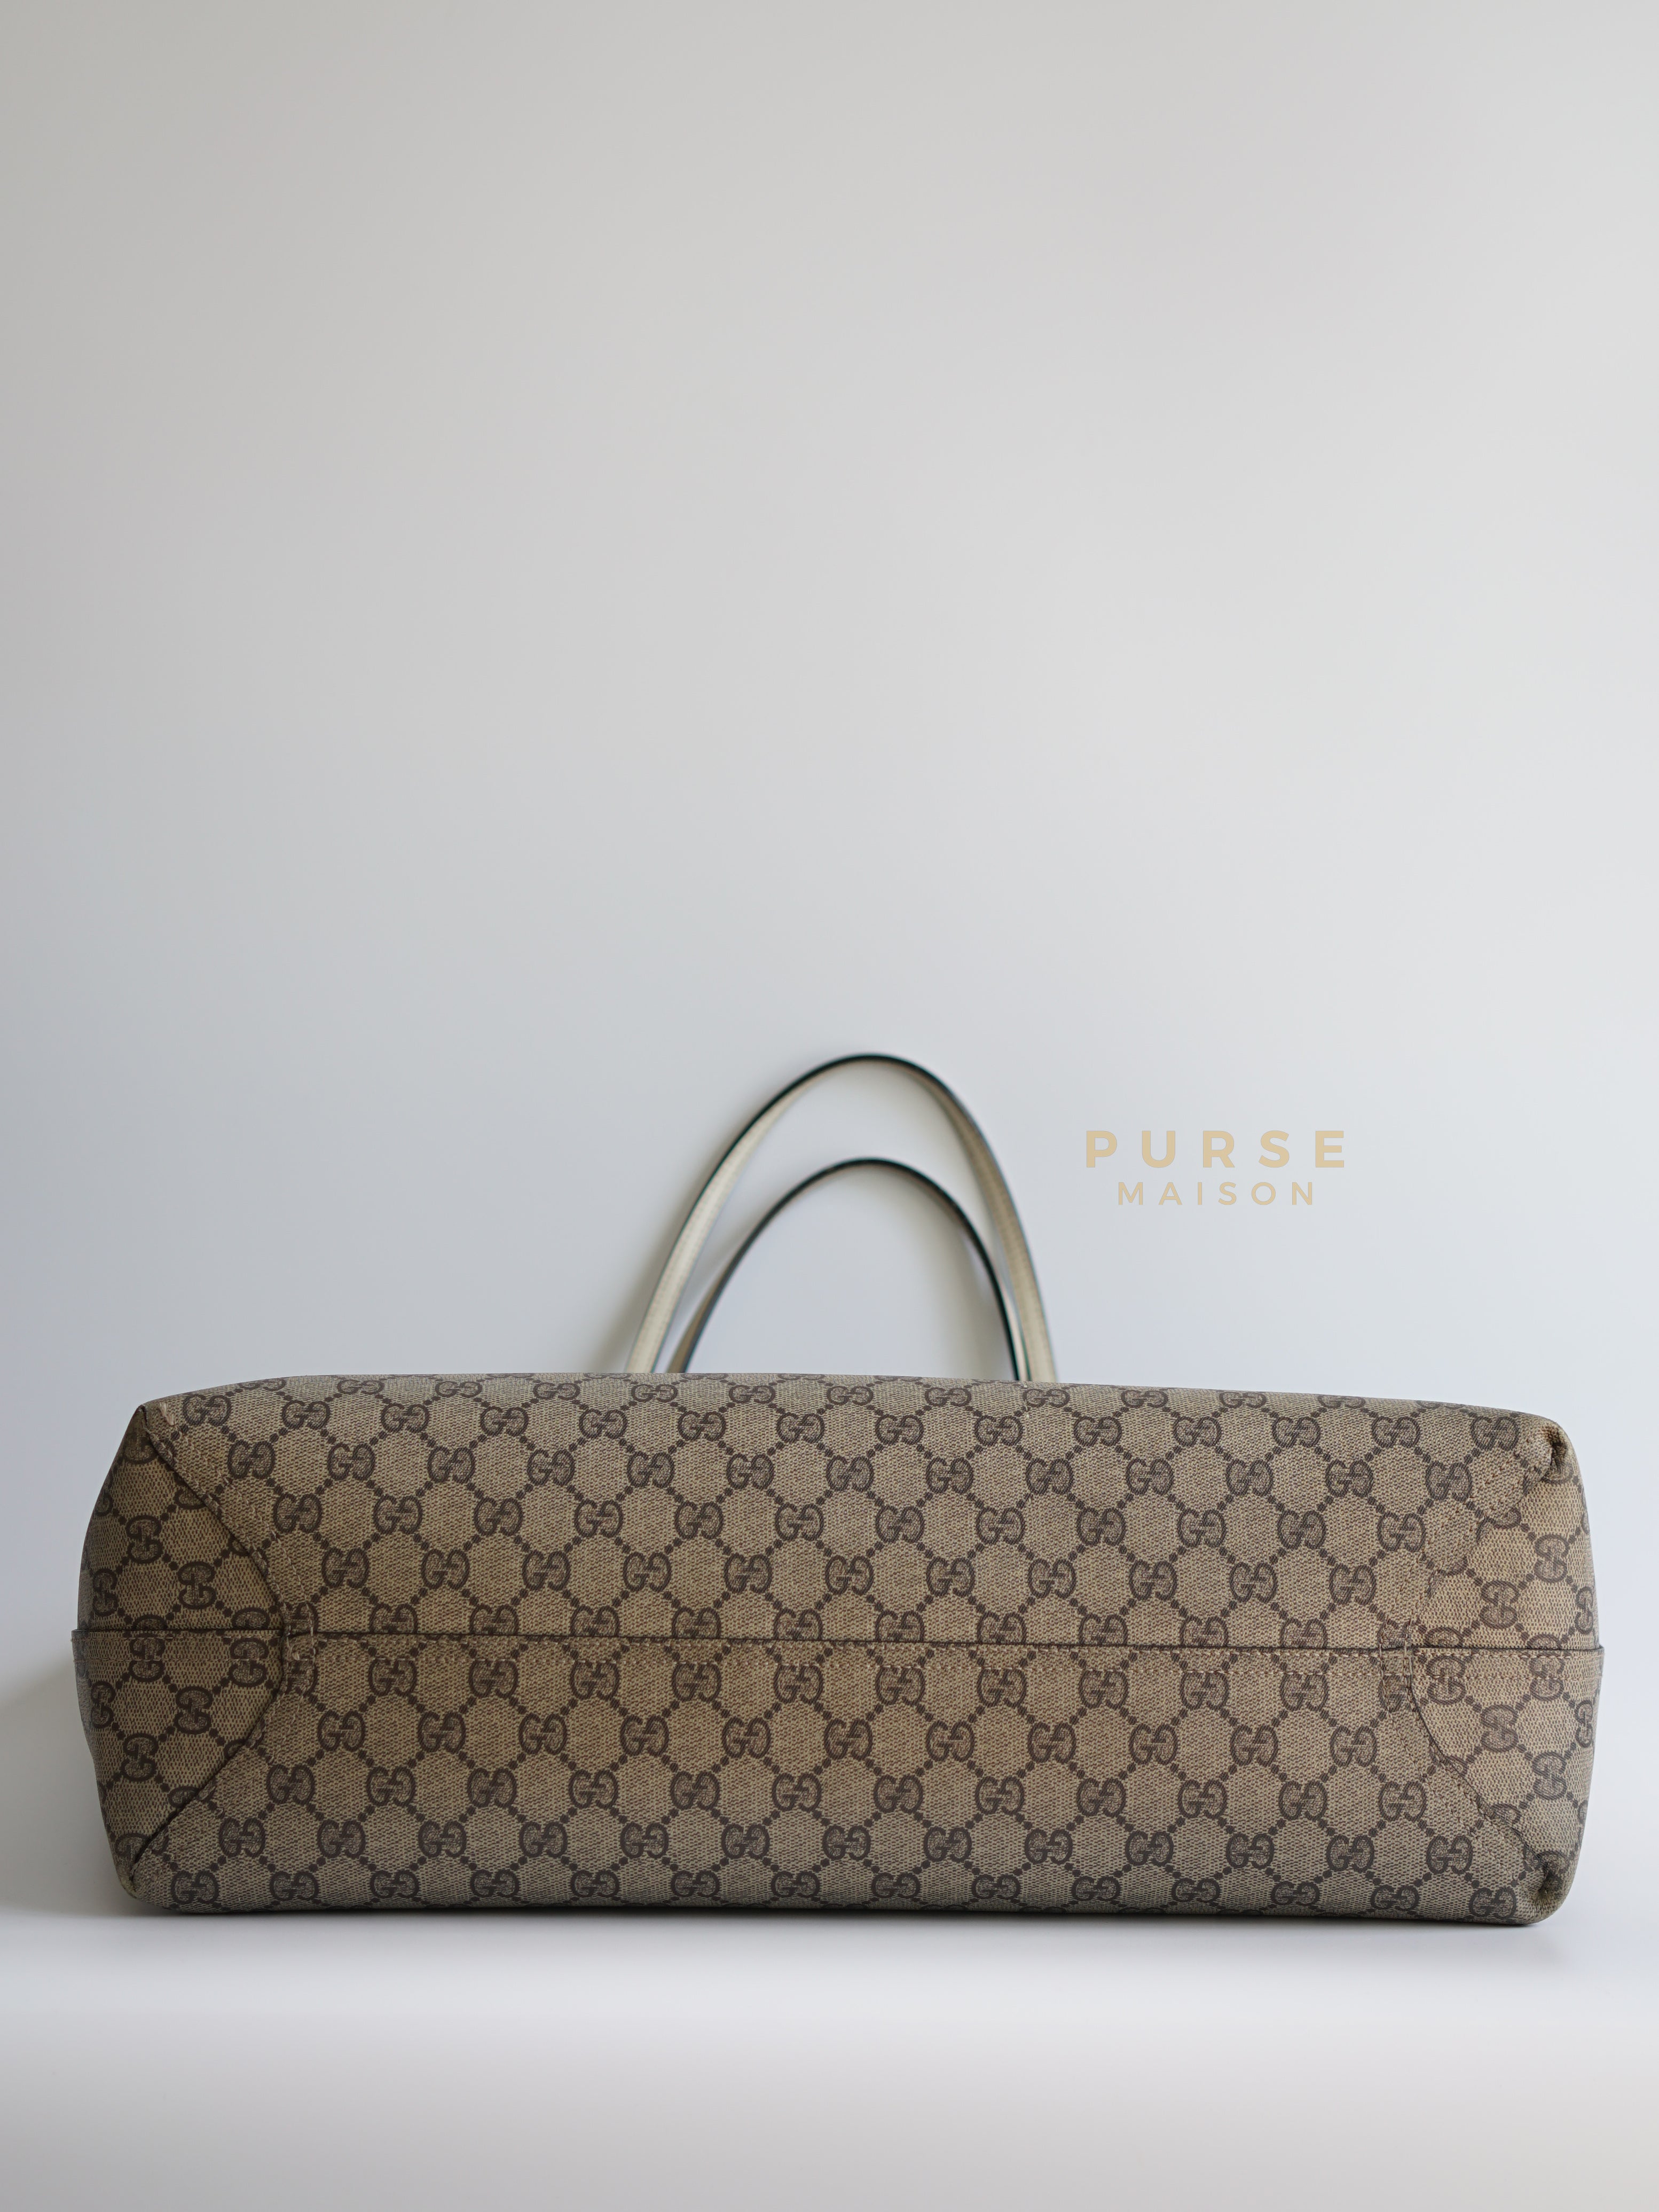 GG Supreme Monogram Large in Reversible Calfskin Tote Bag | Purse Maison Luxury Bags Shop